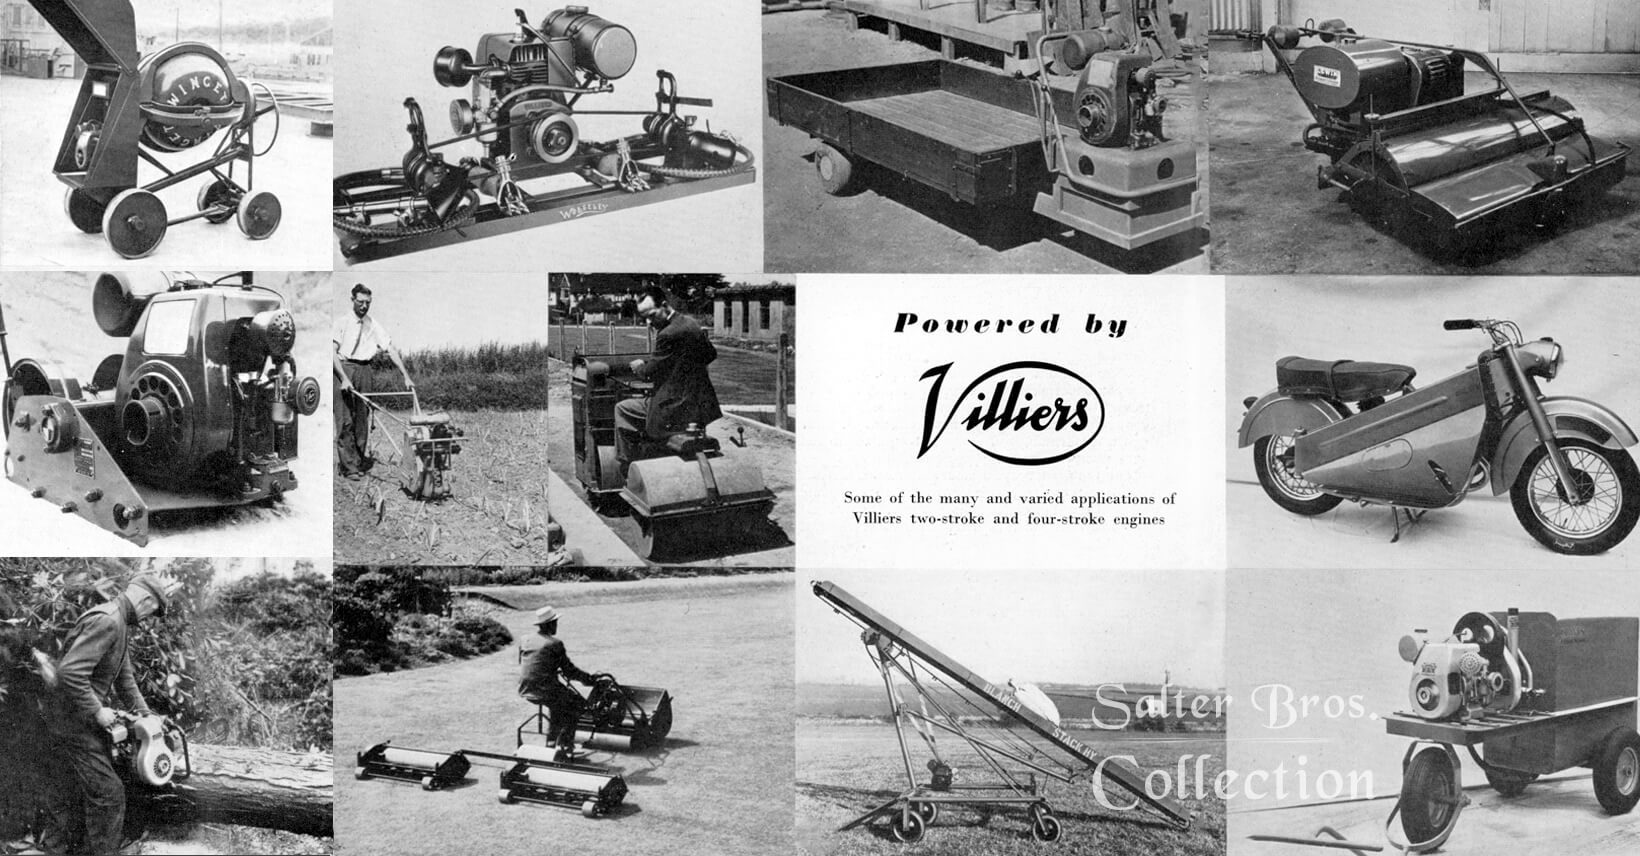 Villiers Engineering Range - Salter Bros. Collection